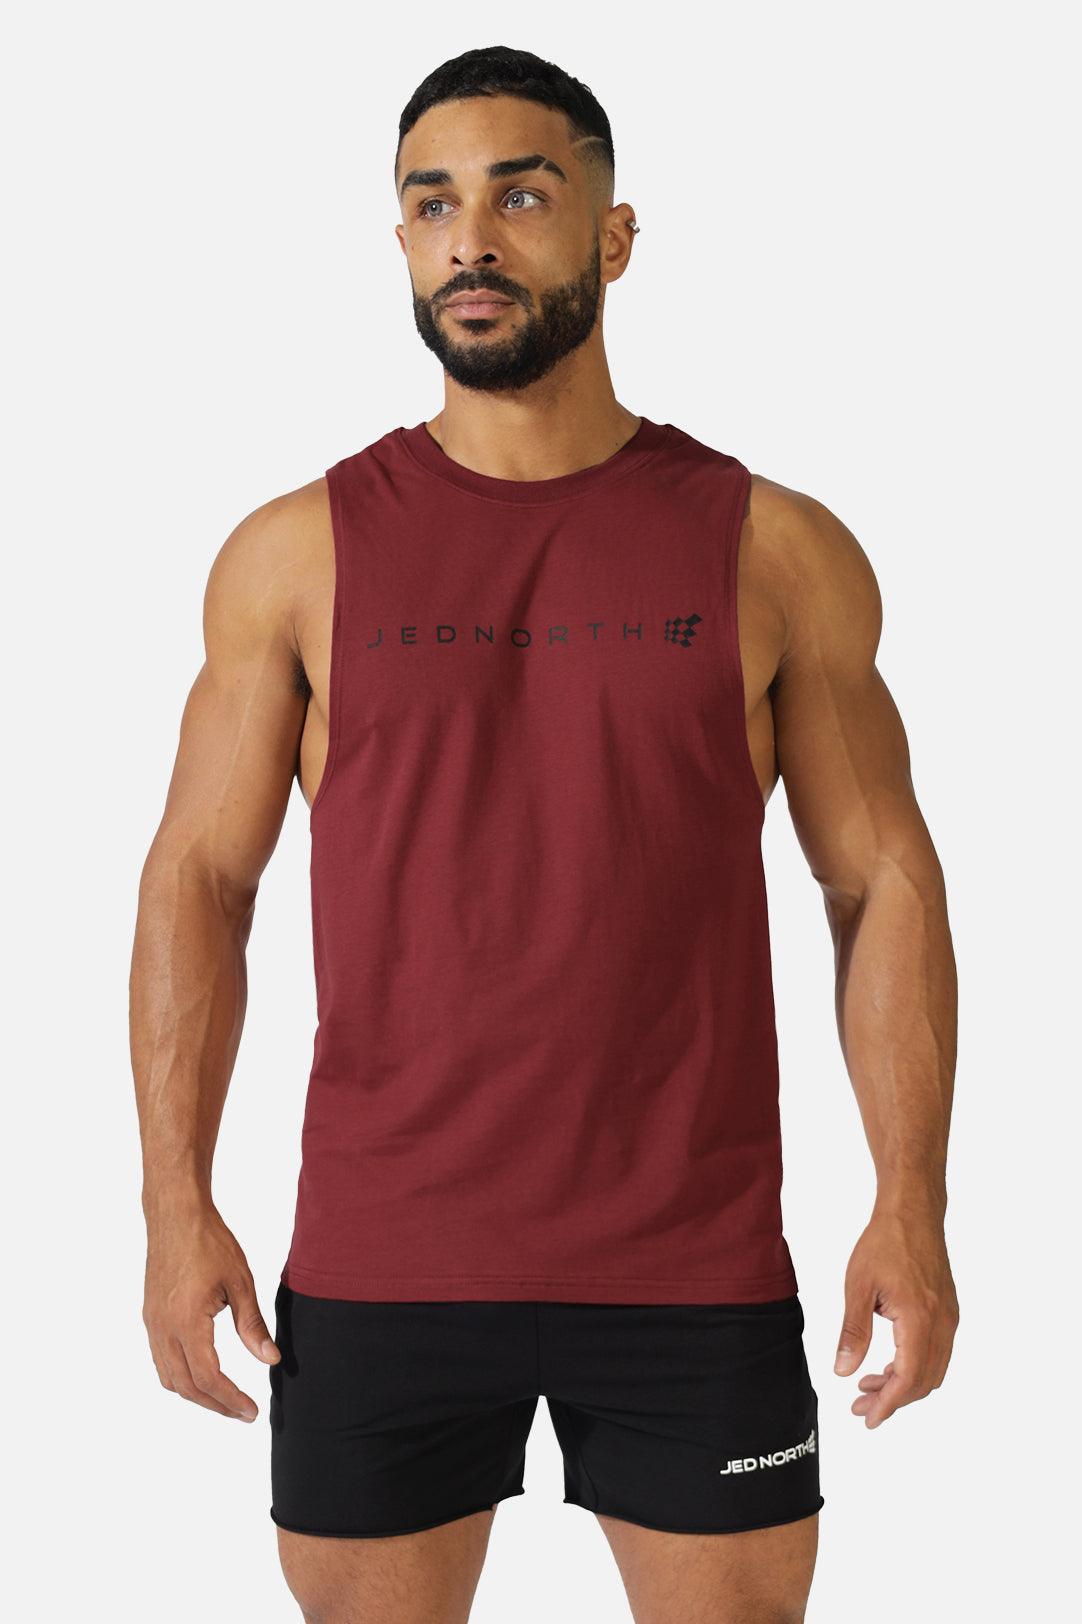 Men's Tees, Workout Shirts For Men